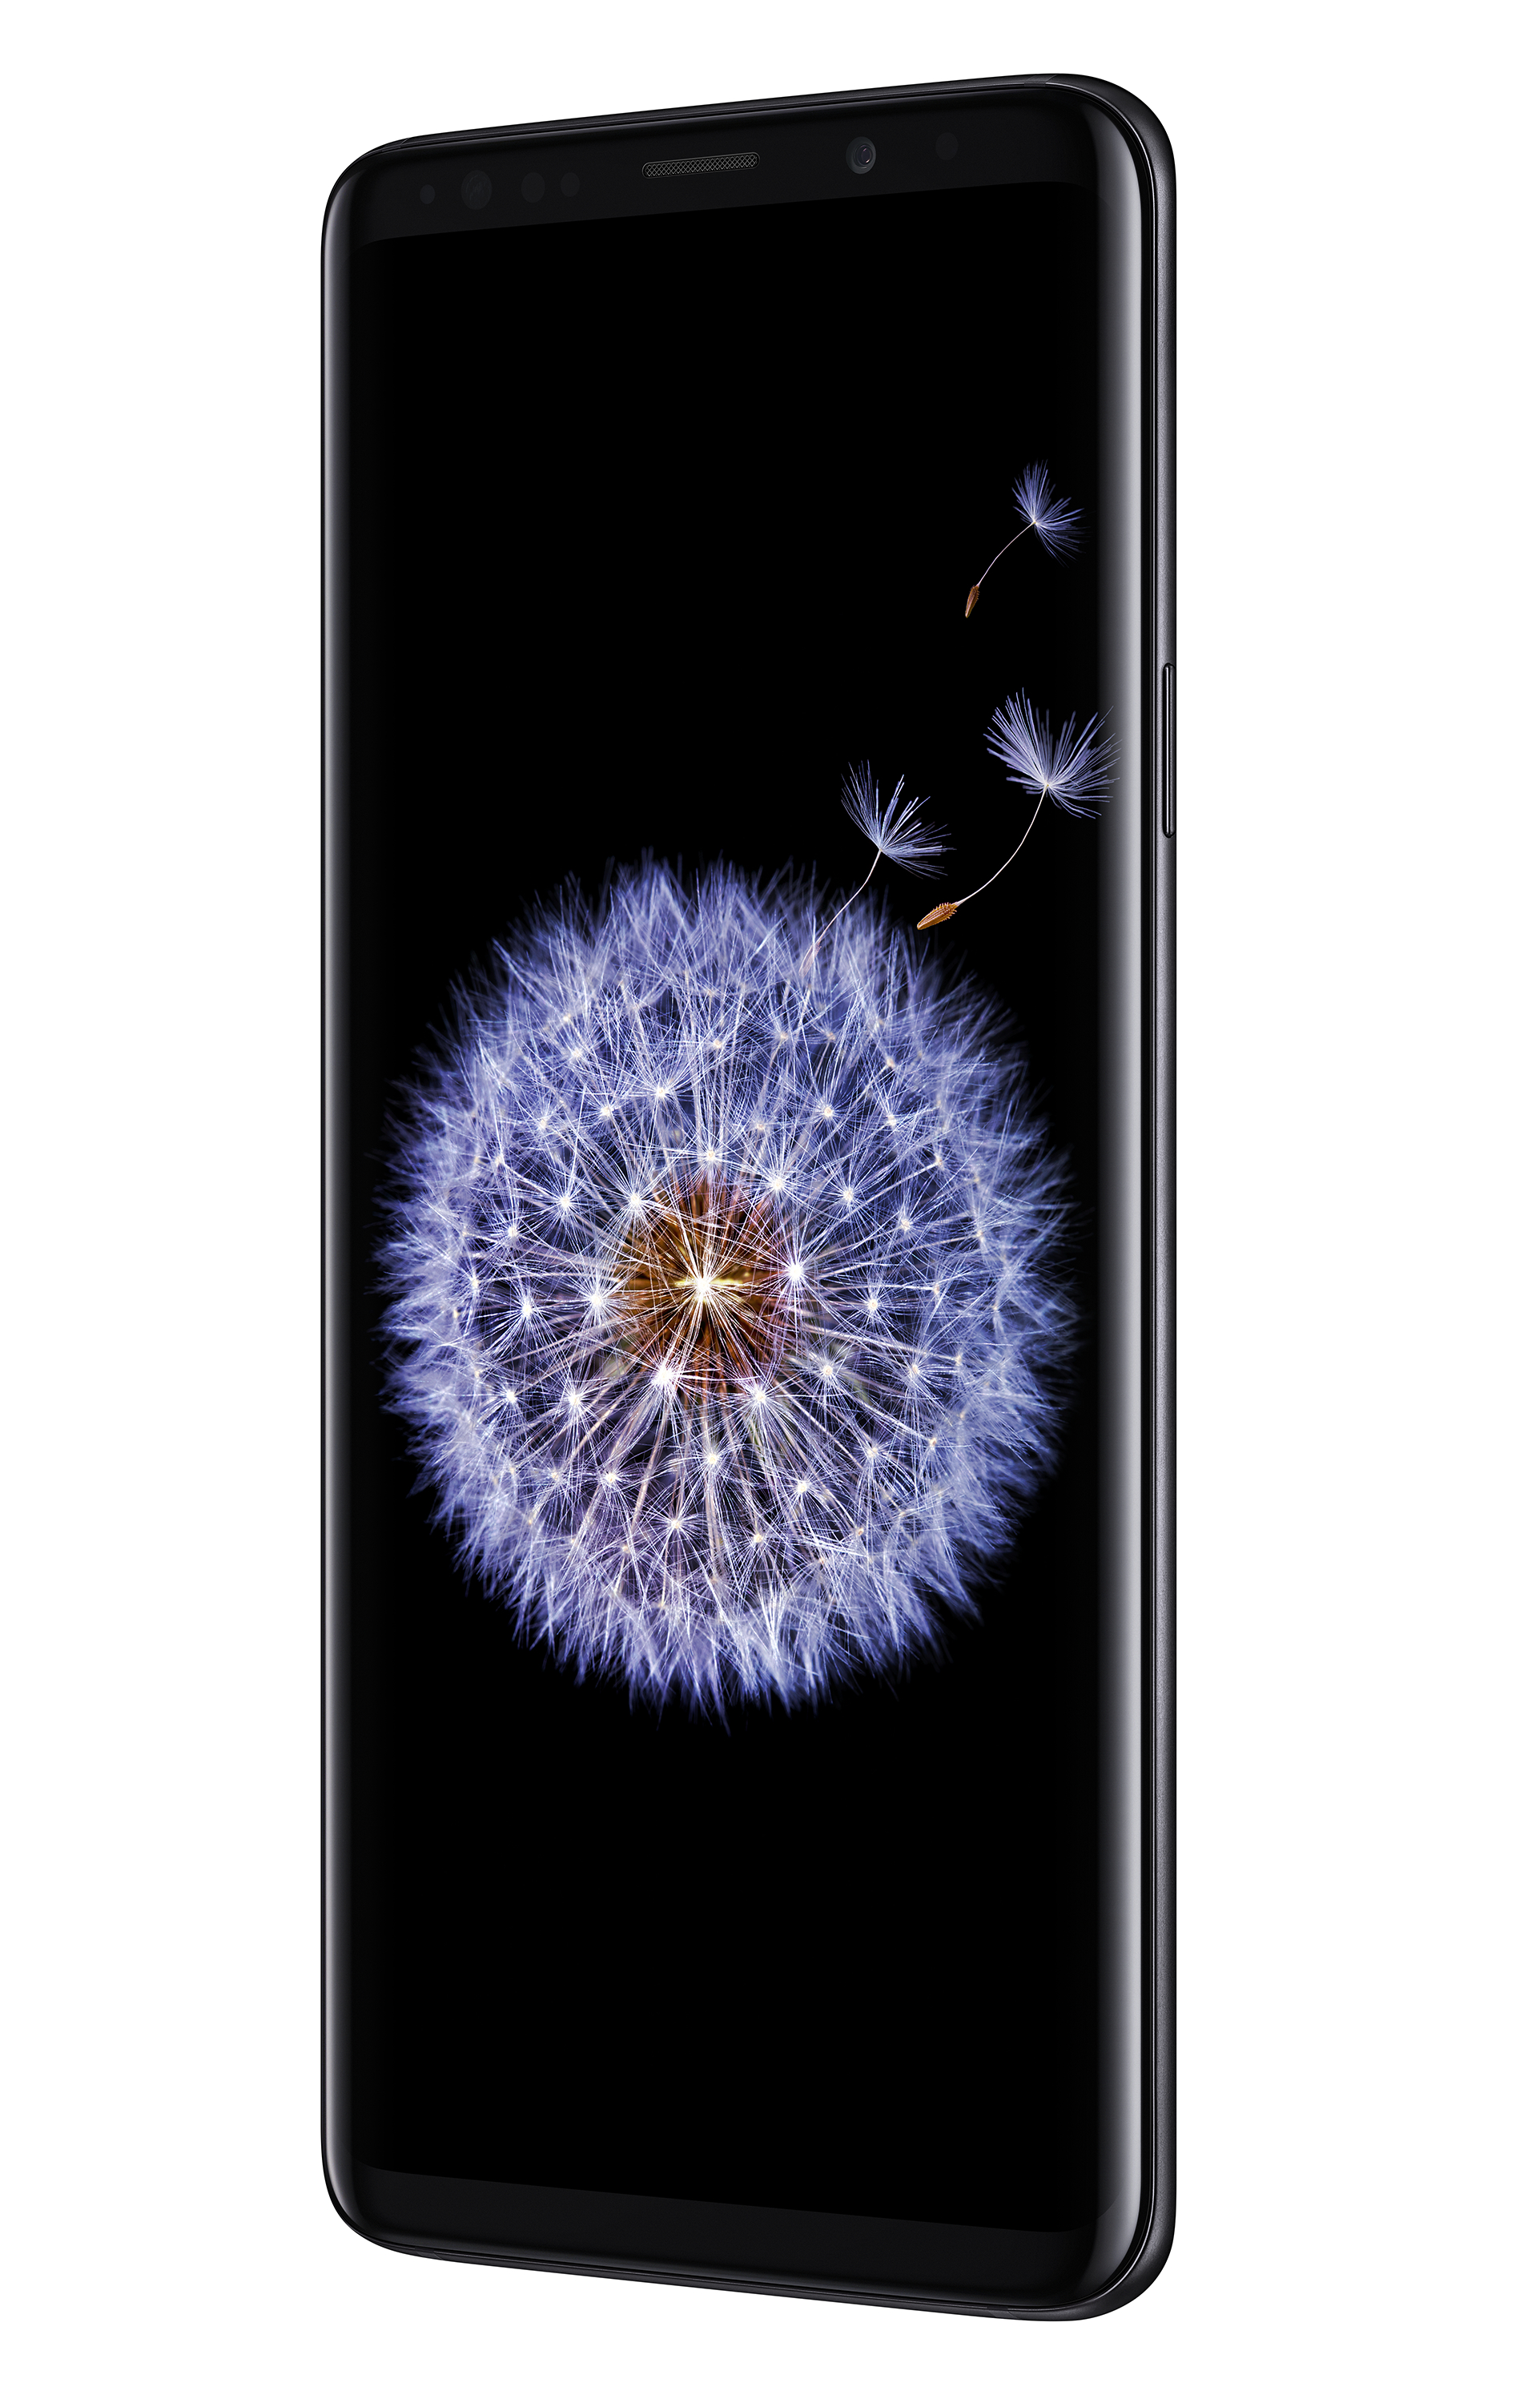 SAMSUNG Galaxy S9+ 64gb Unlocked Smartphone, Black - image 4 of 5